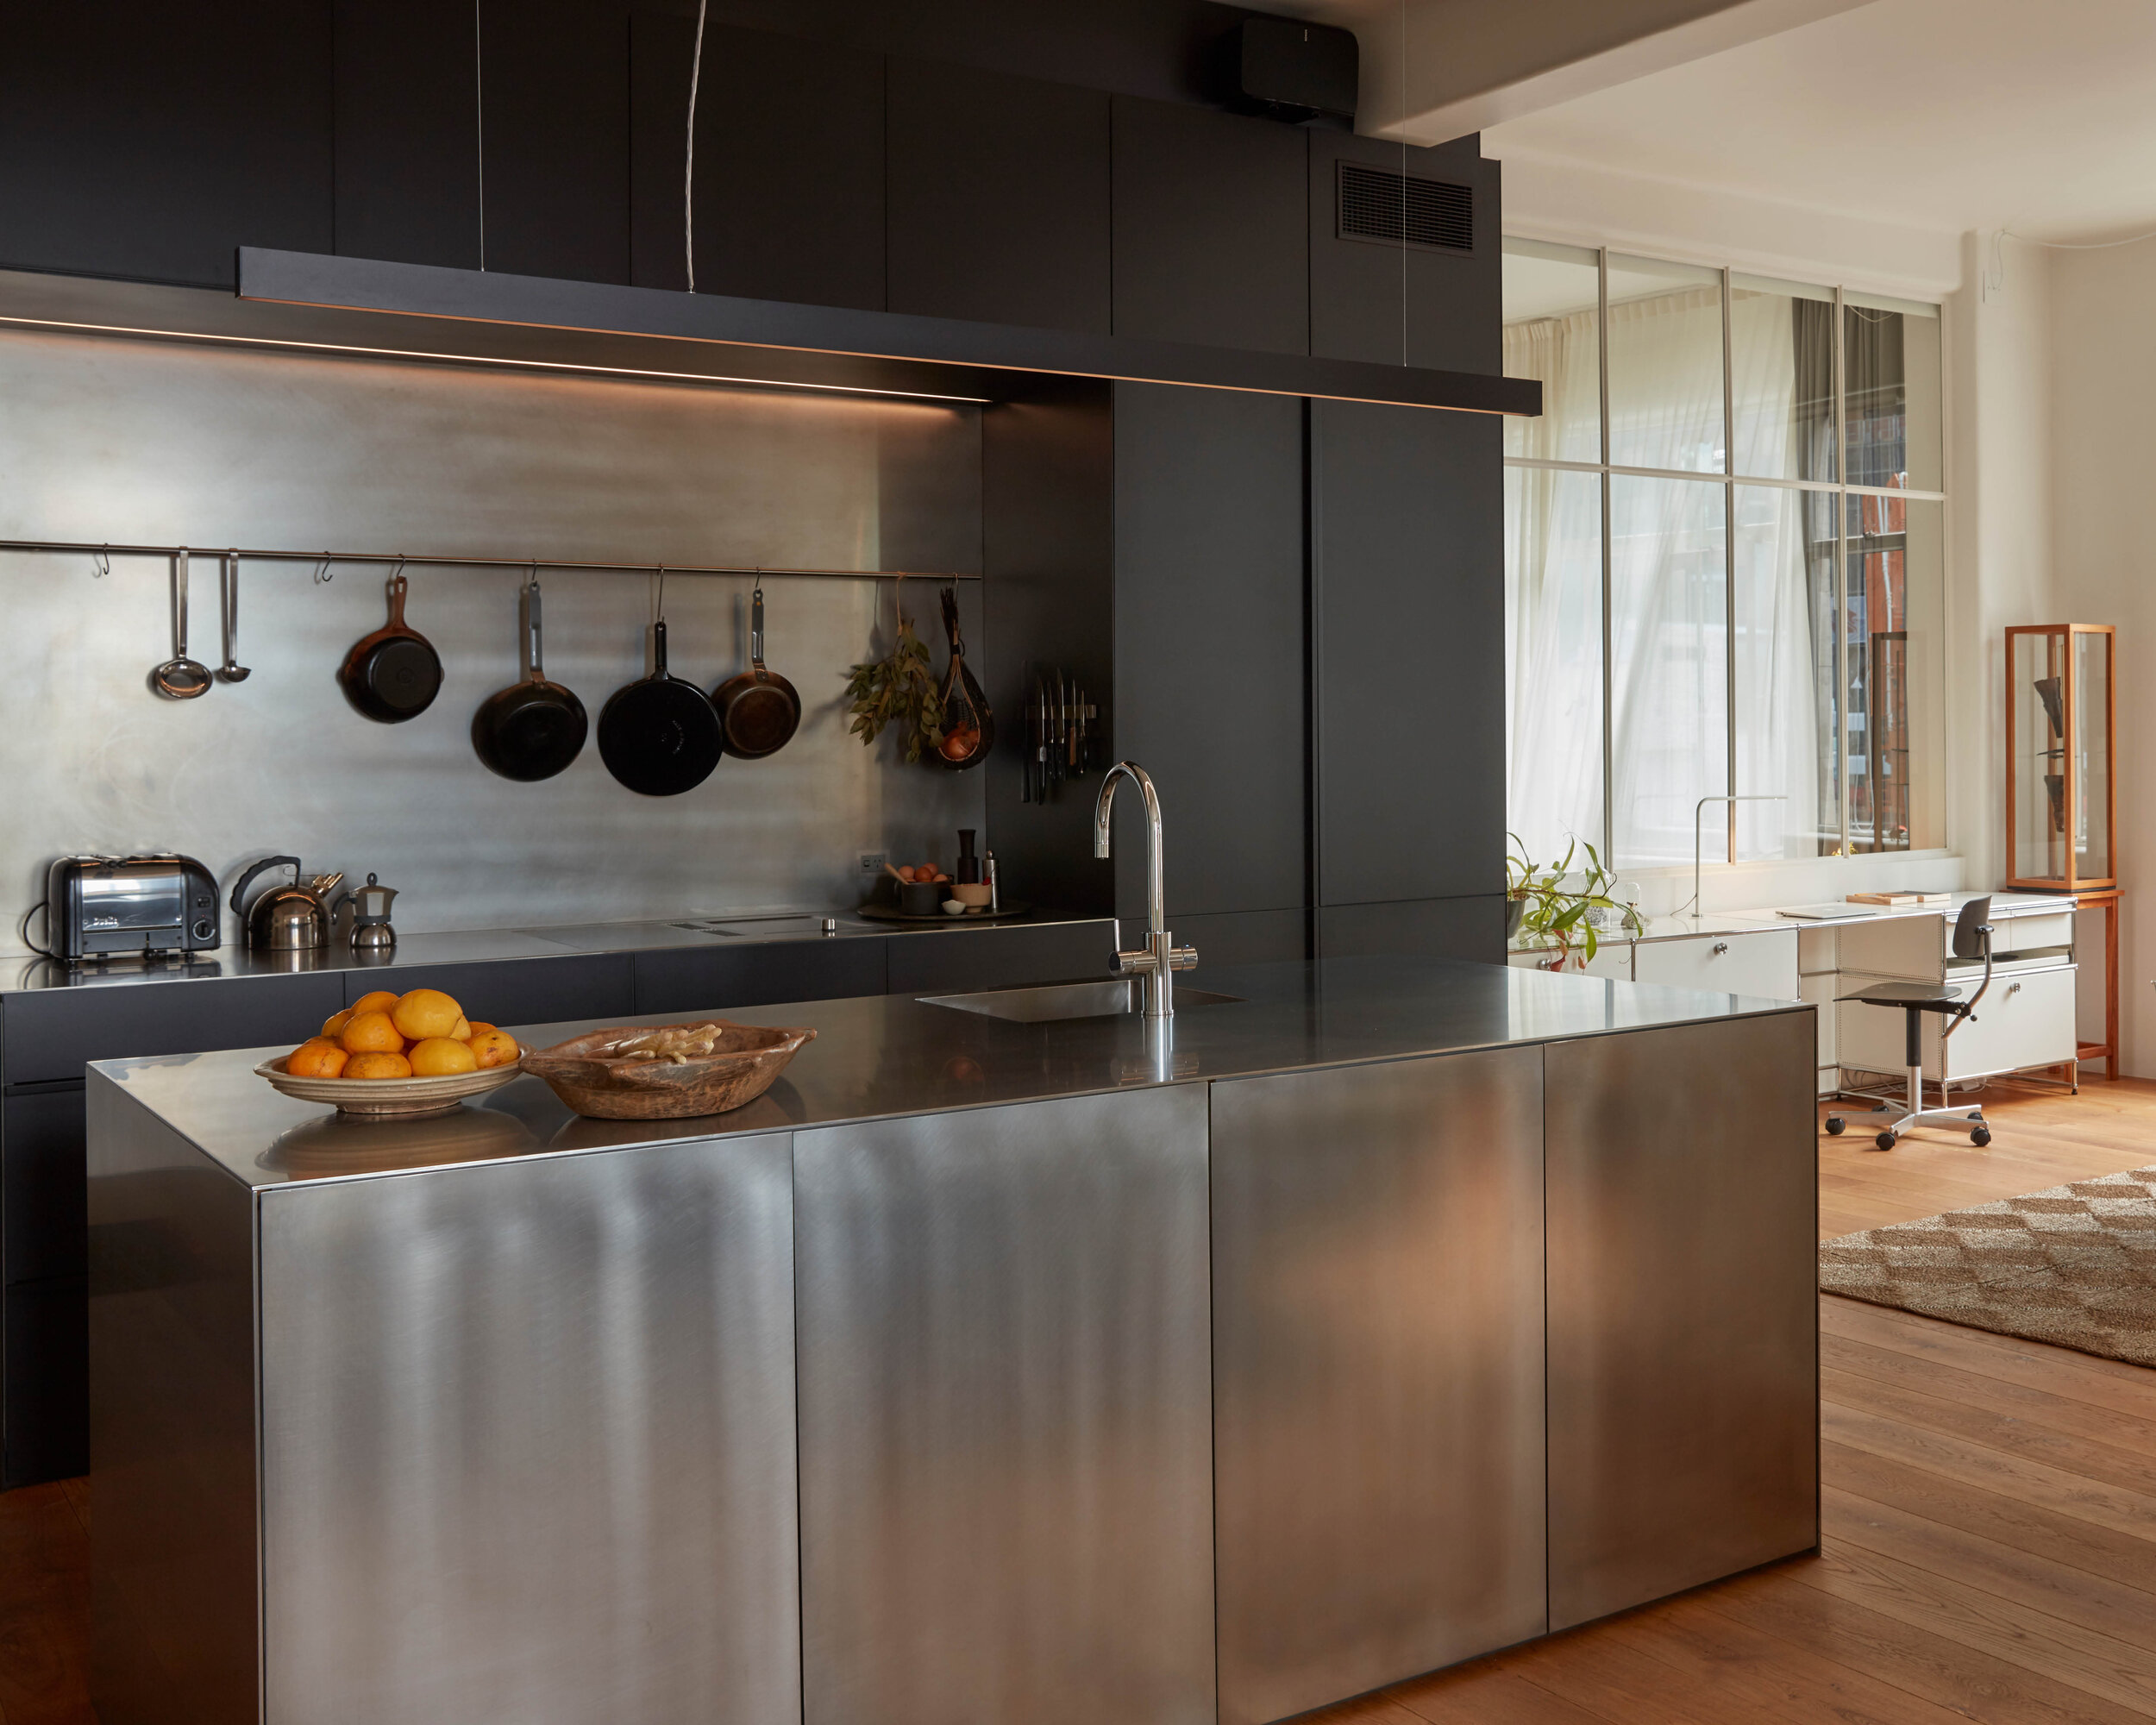 Chelsea Apartment kitchen.jpg